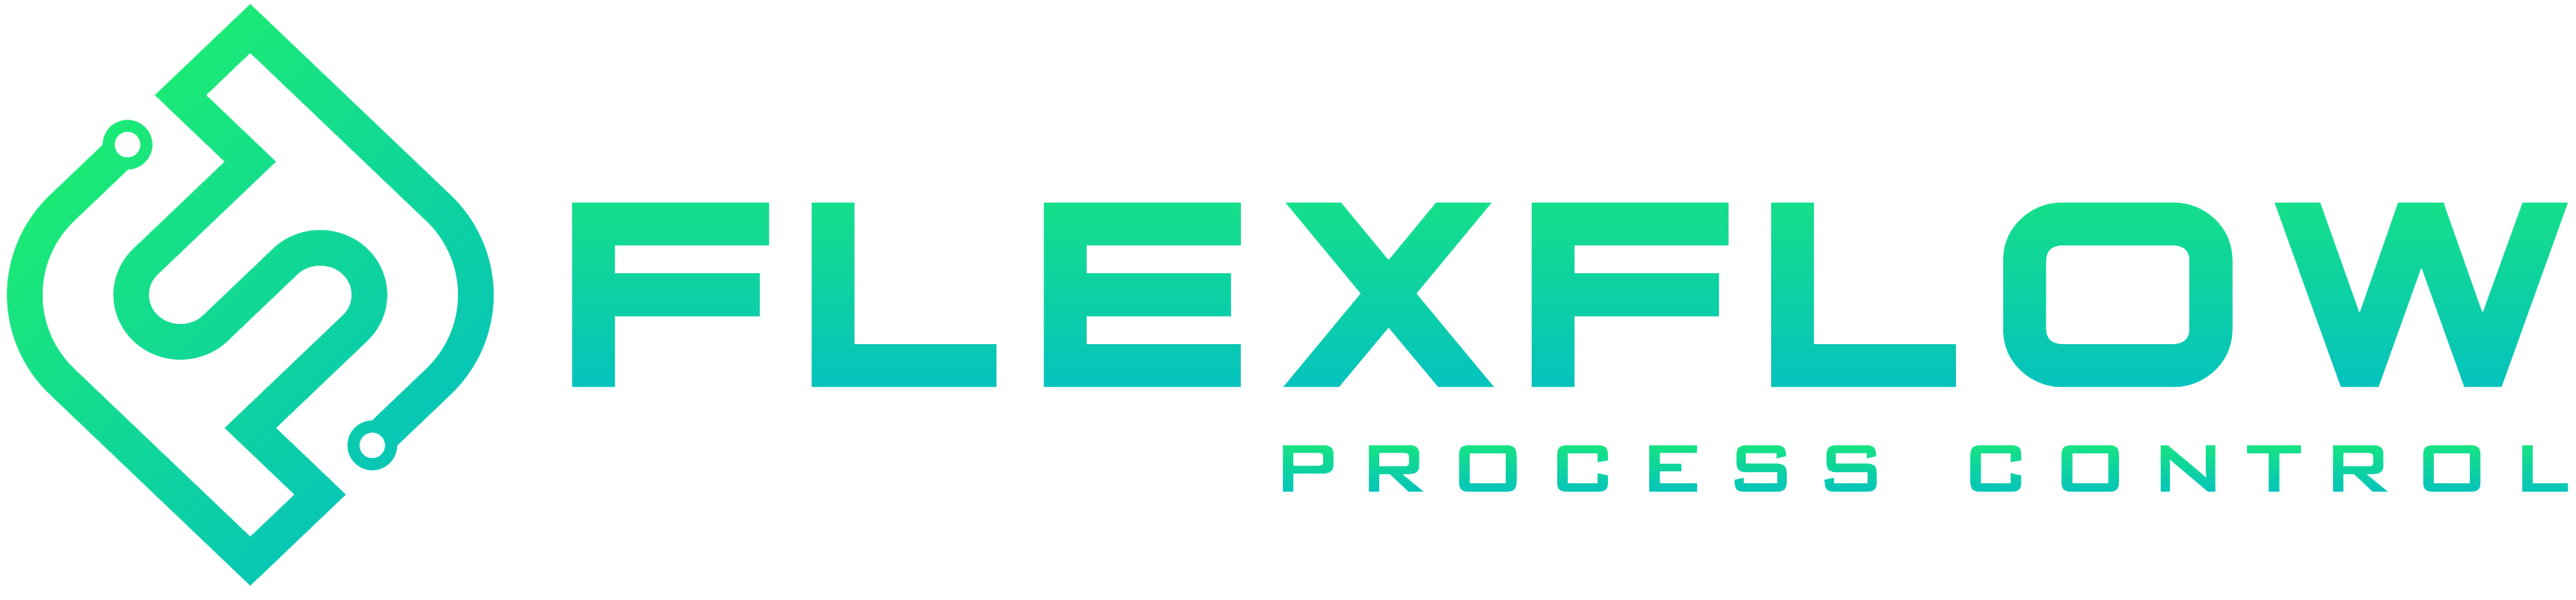 Flexflow logo